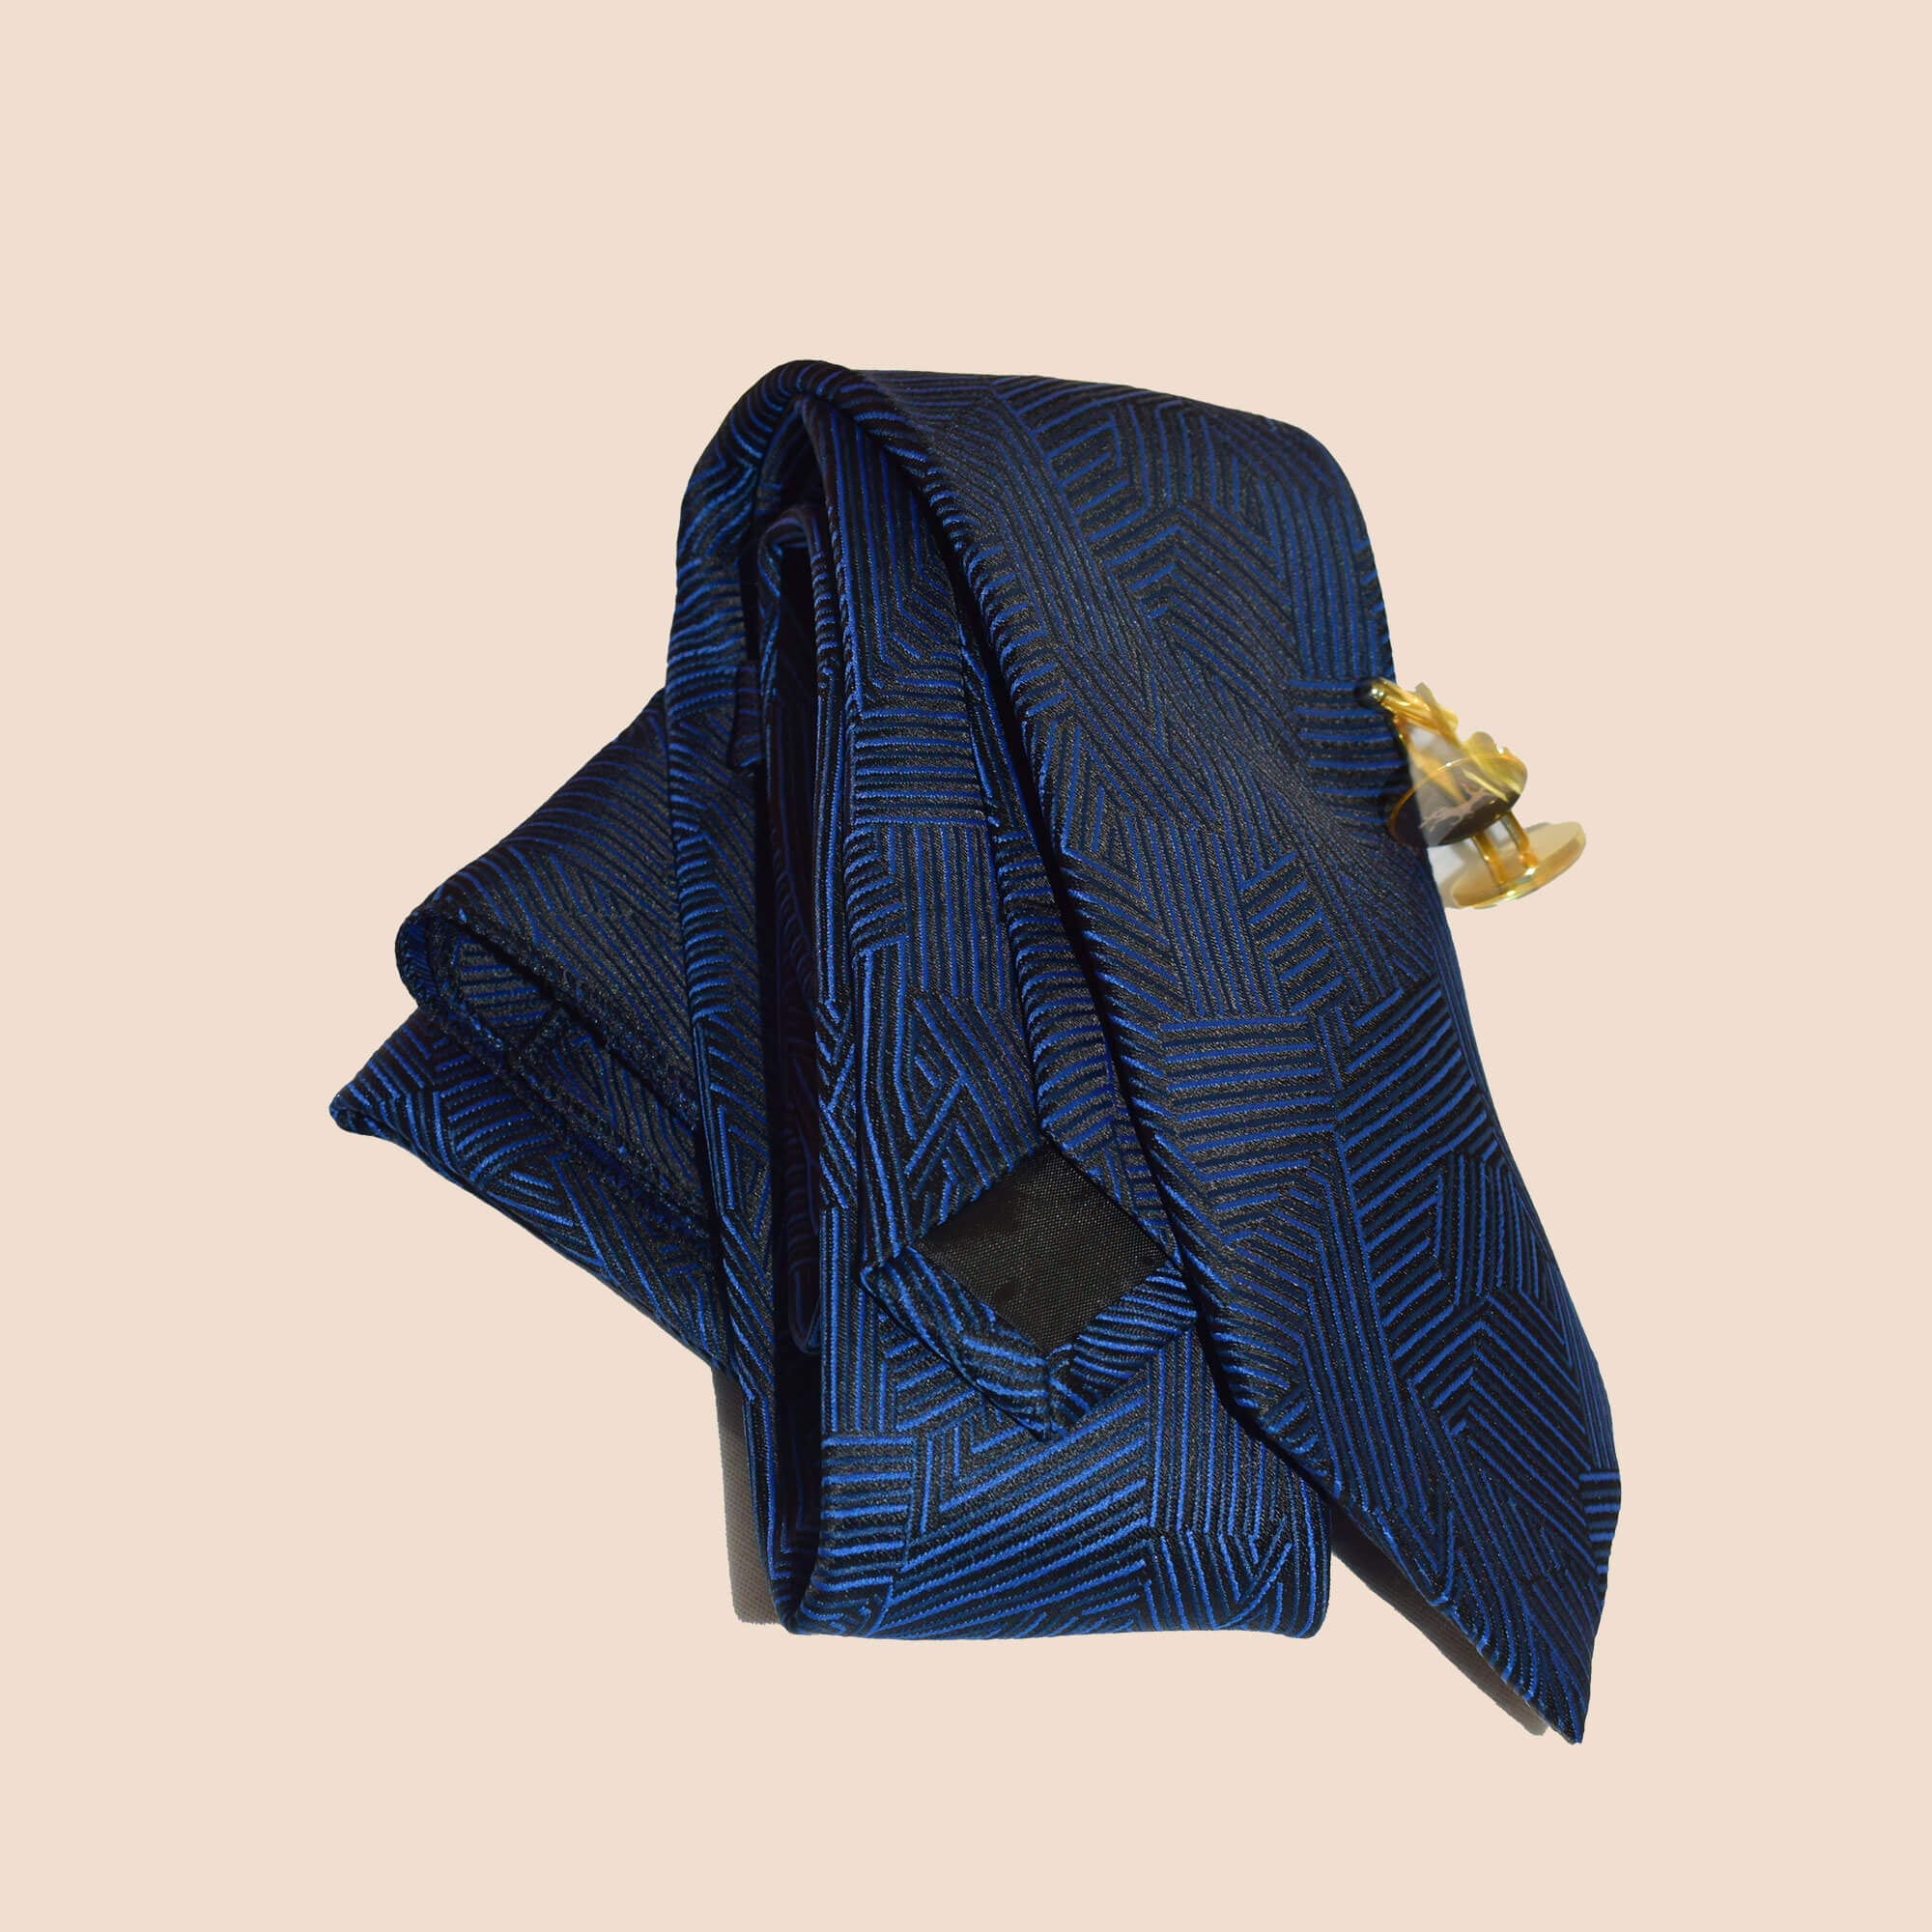 Majestic Blue Handmade Necktie and Pocket Square Set